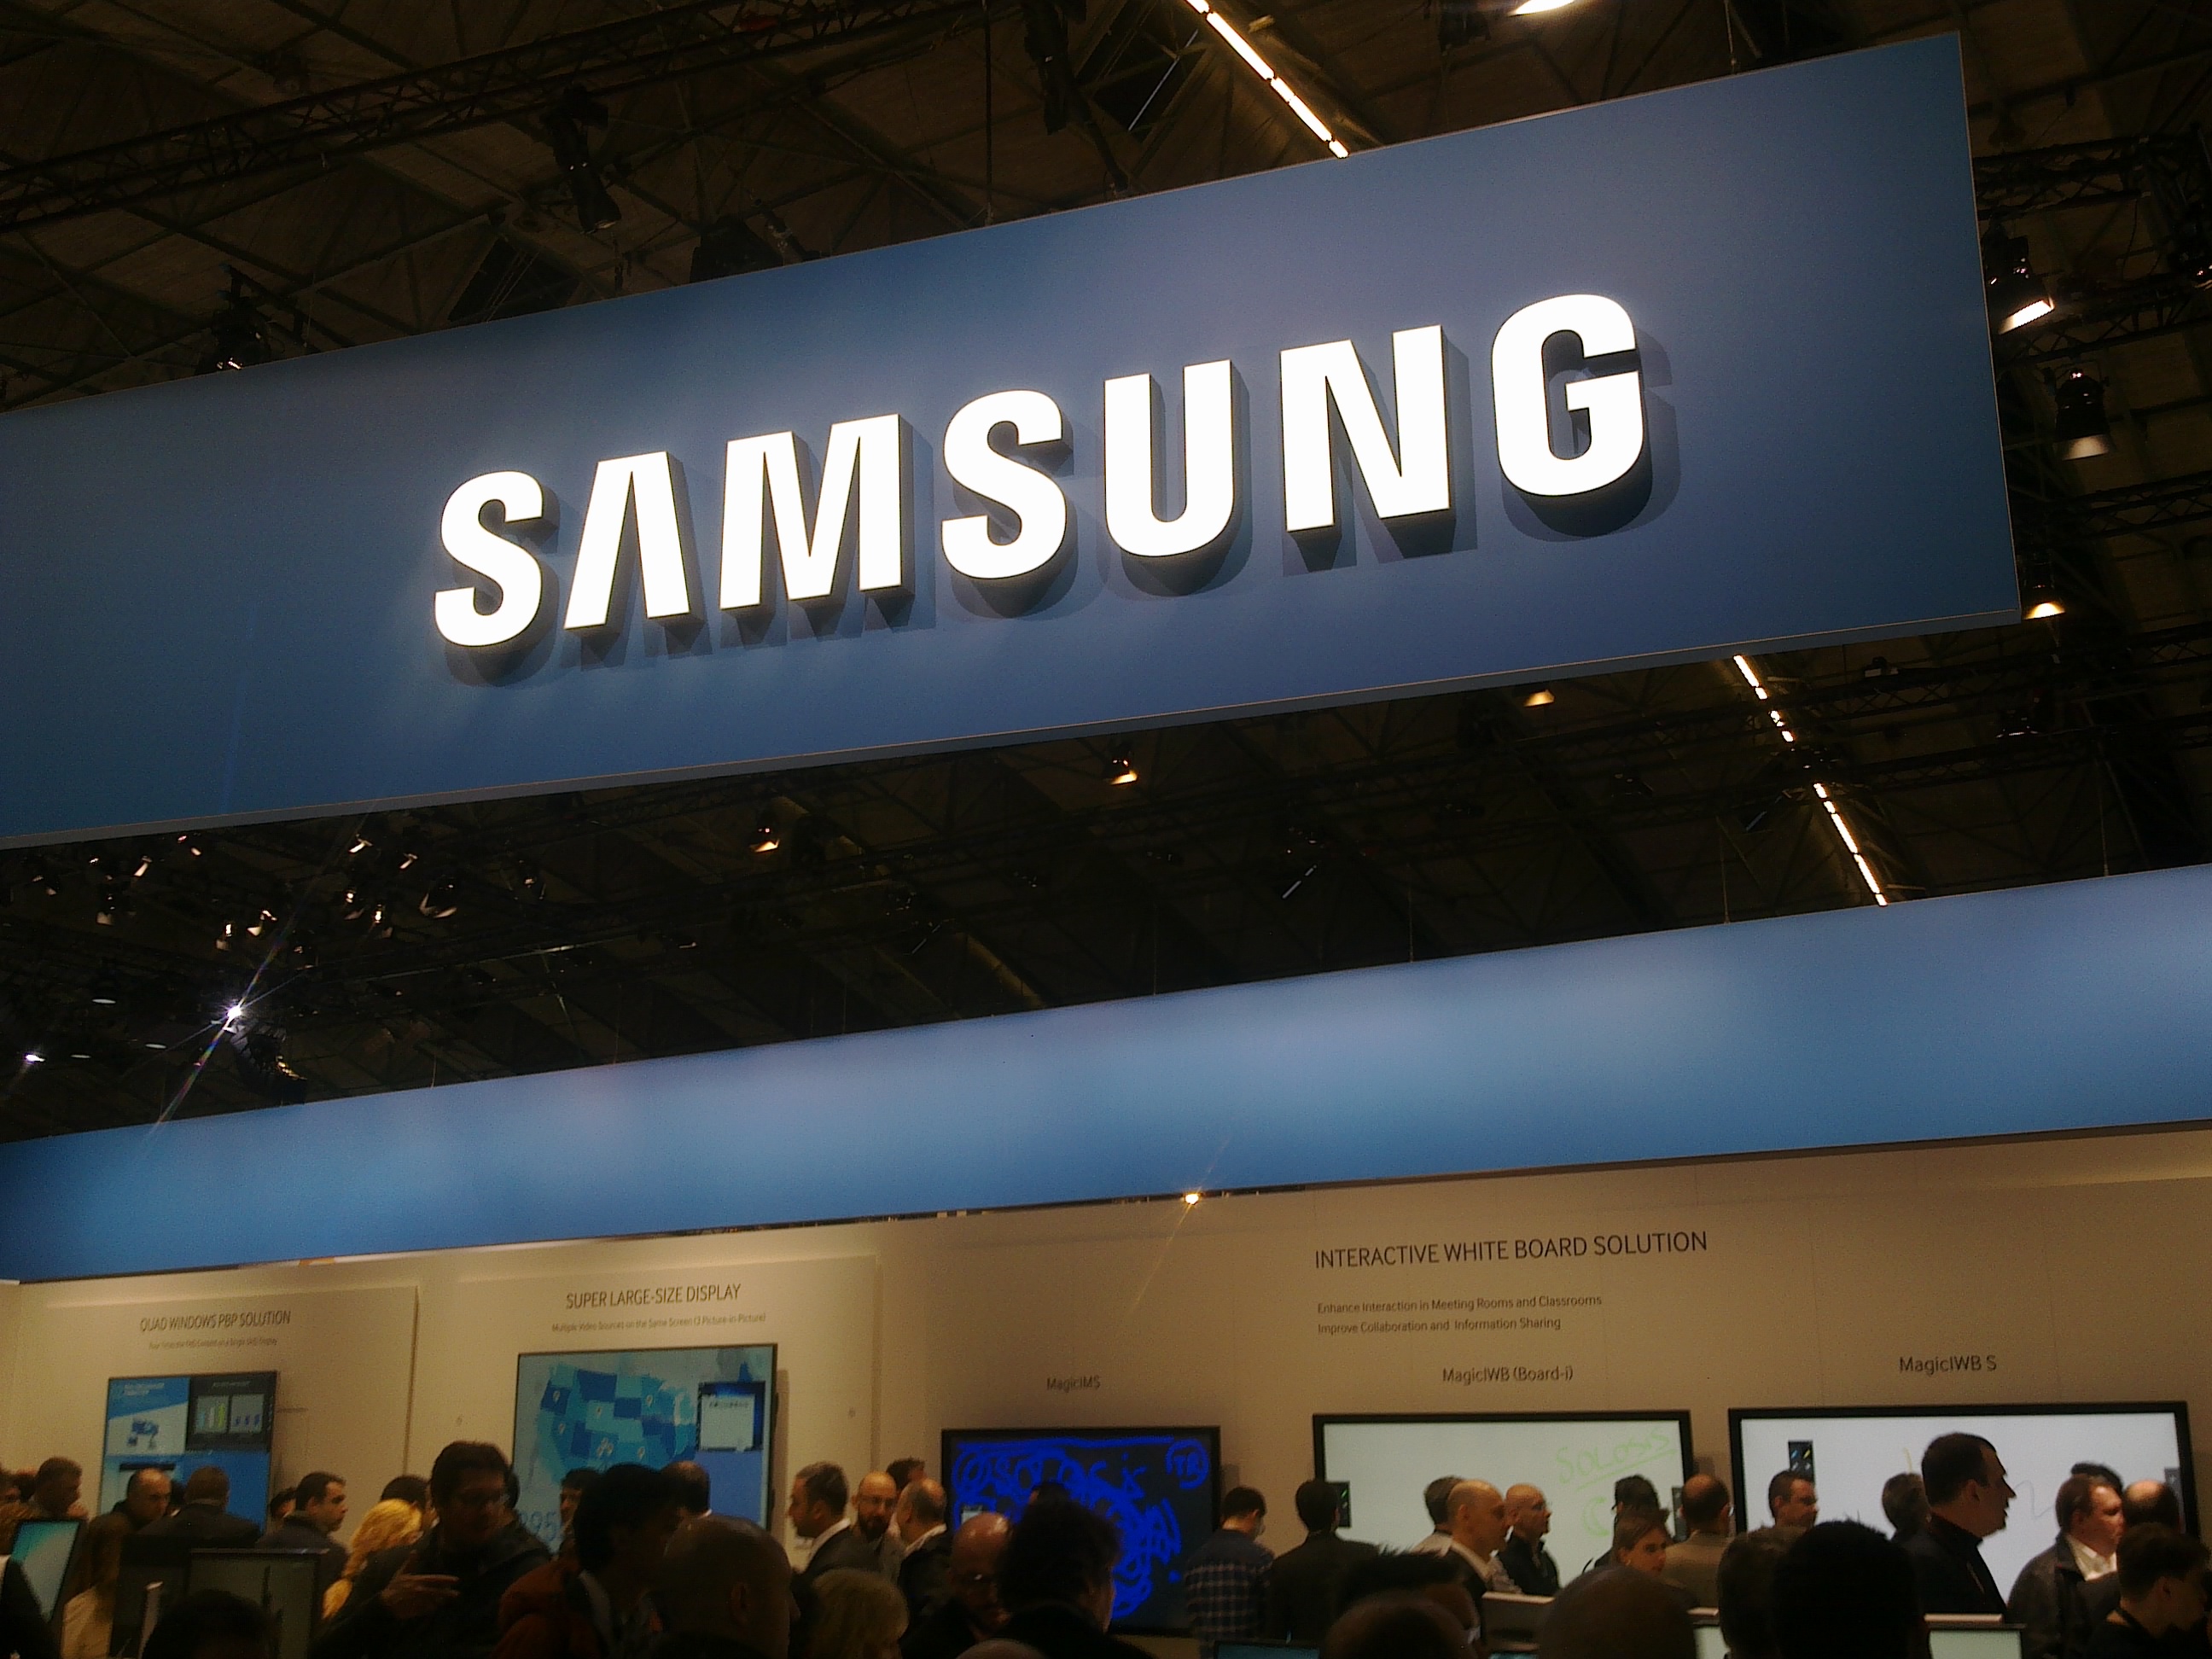 AB dystrybutorem ekranów Samsung Smart Signage